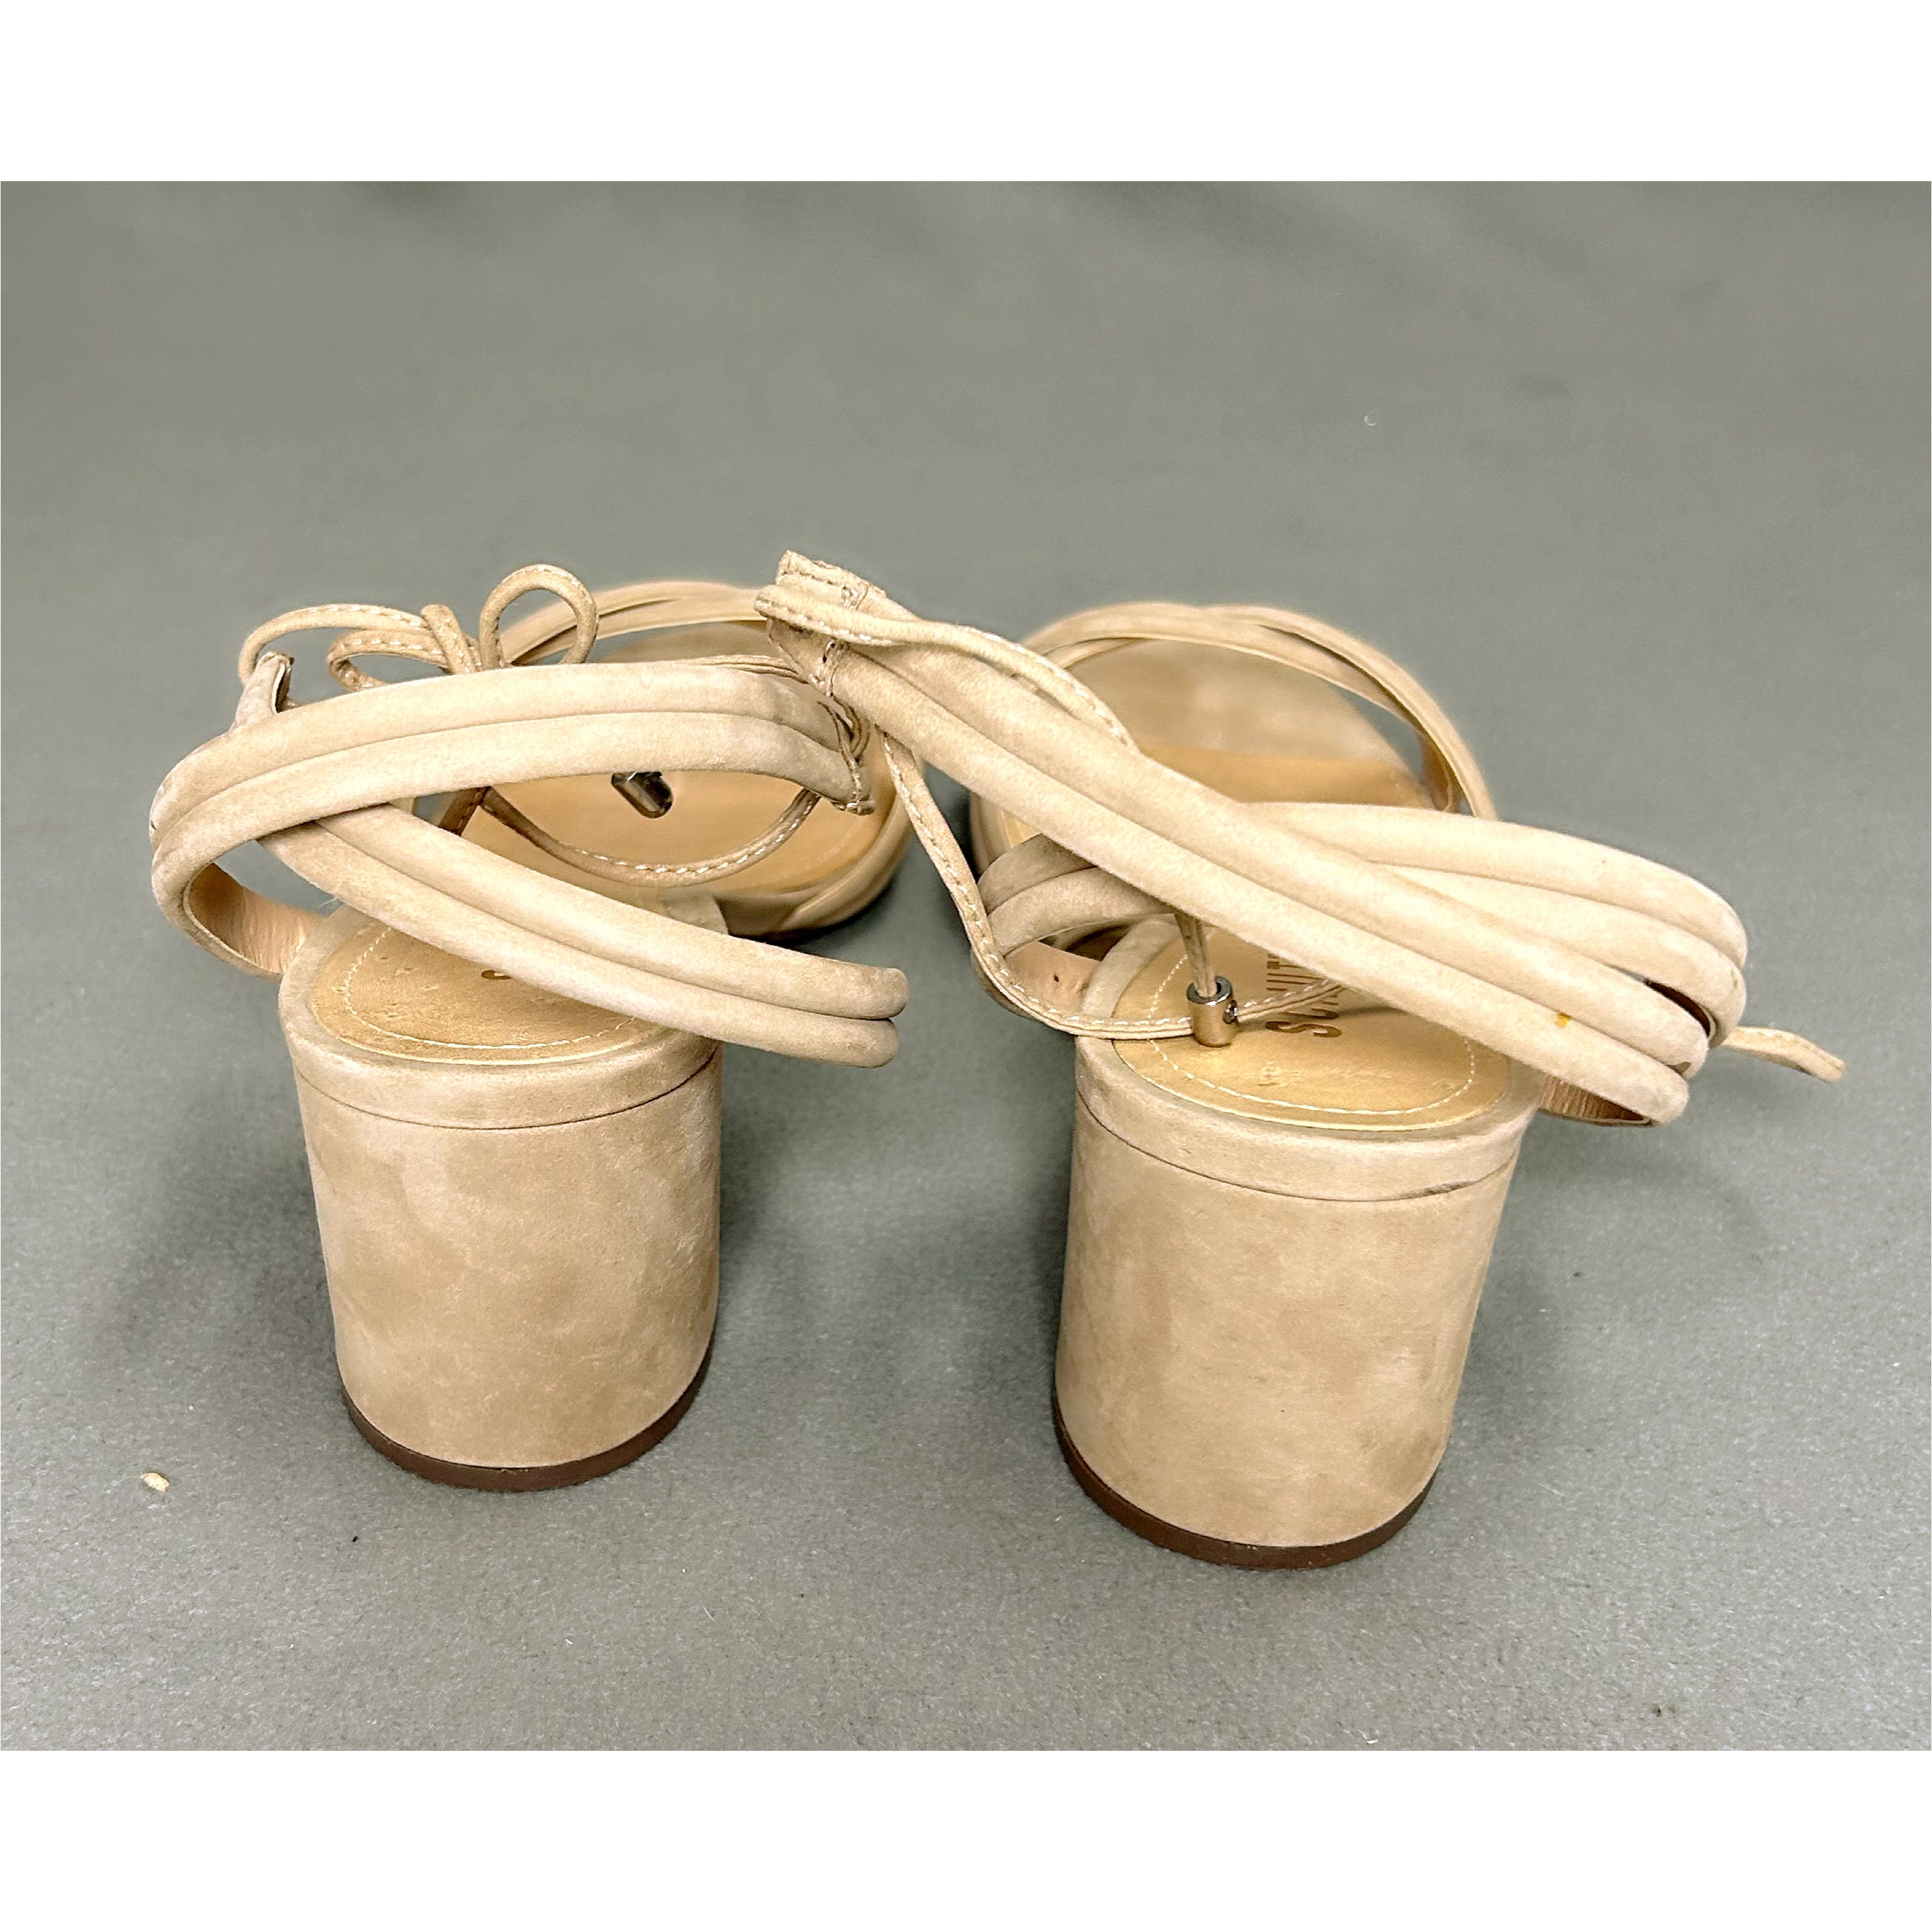 Schutz tan nubuck suede sandals, size 9, NEW IN BOX!